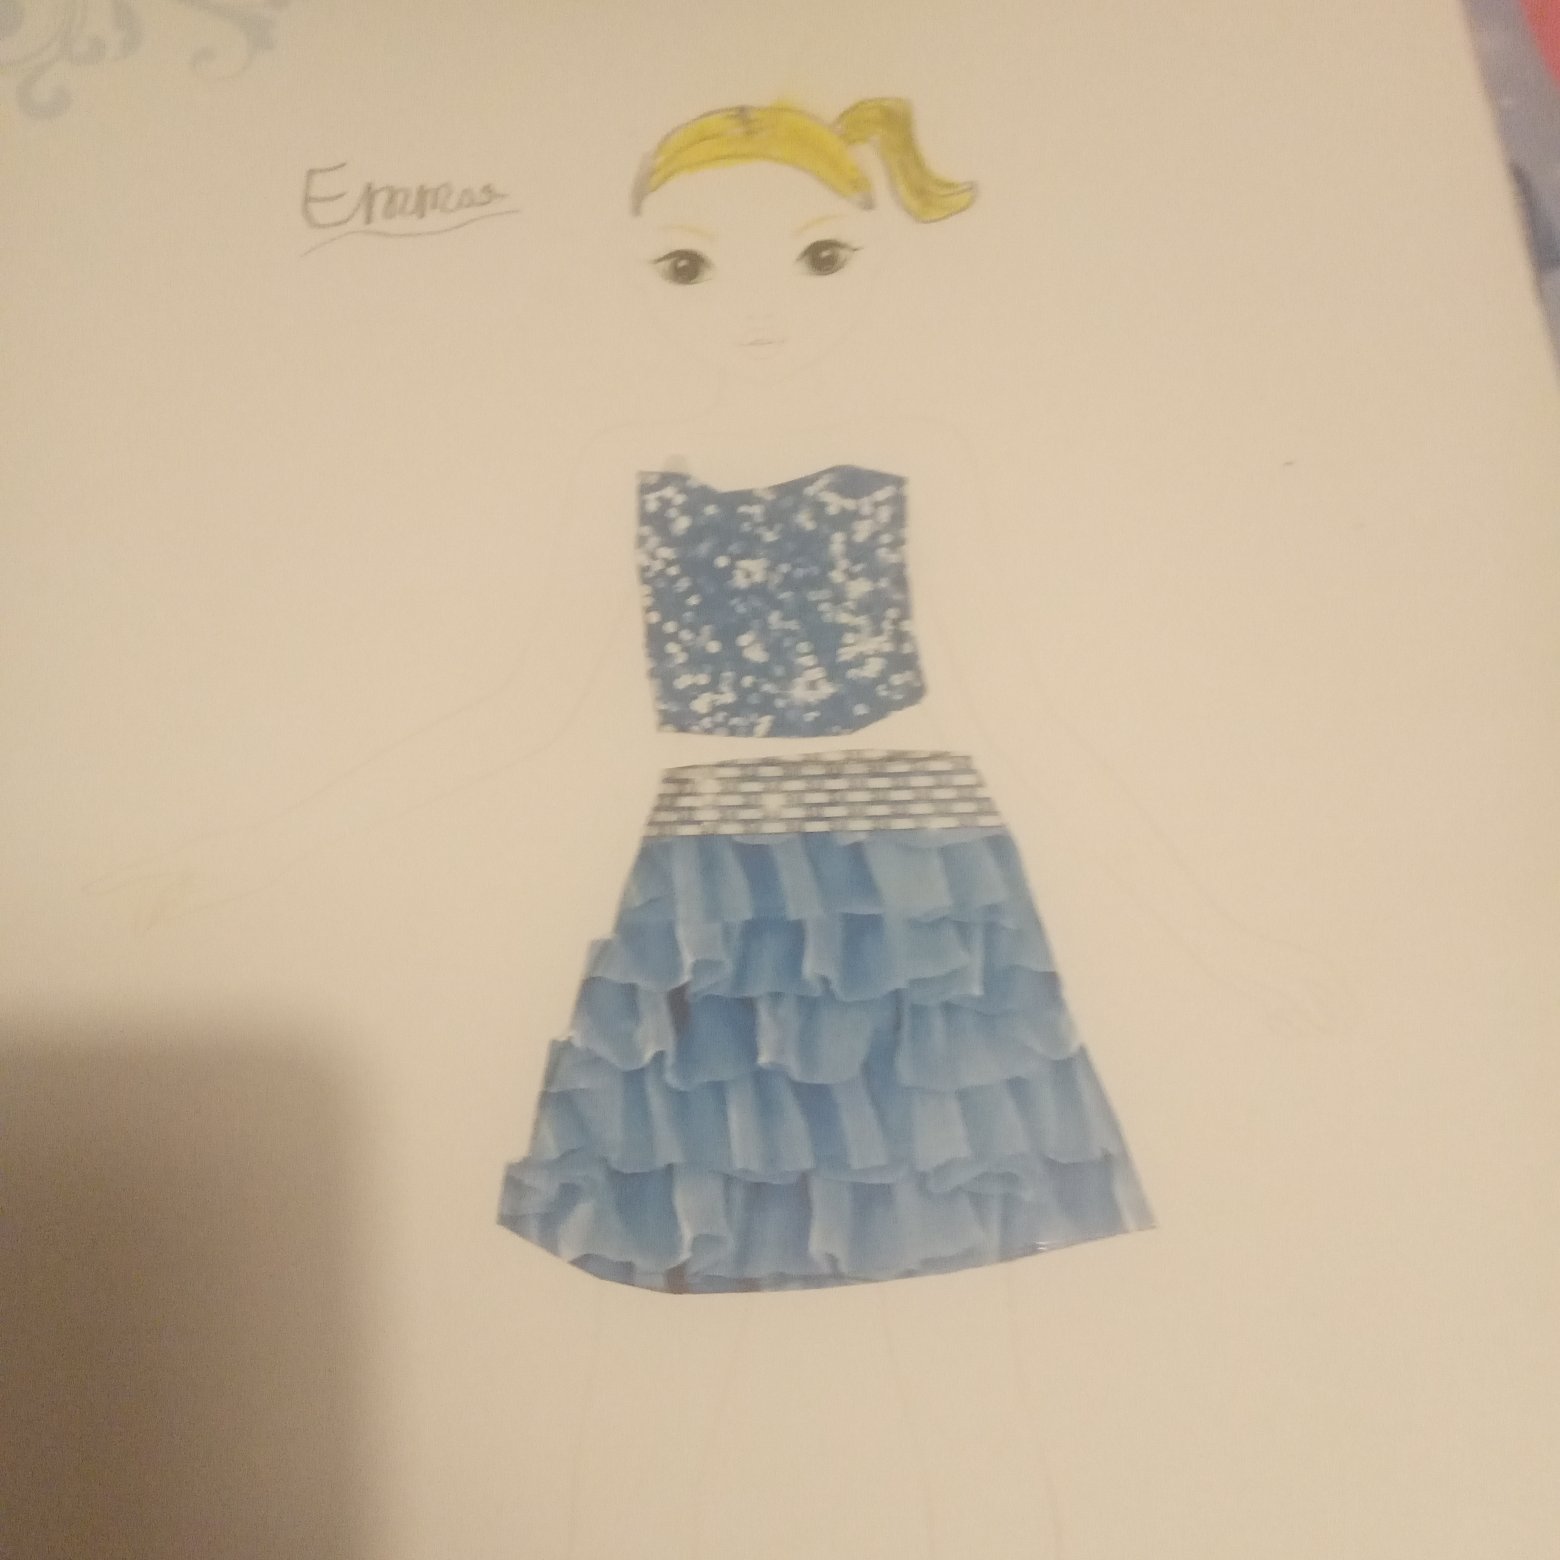 Emma Y., 11years, from España